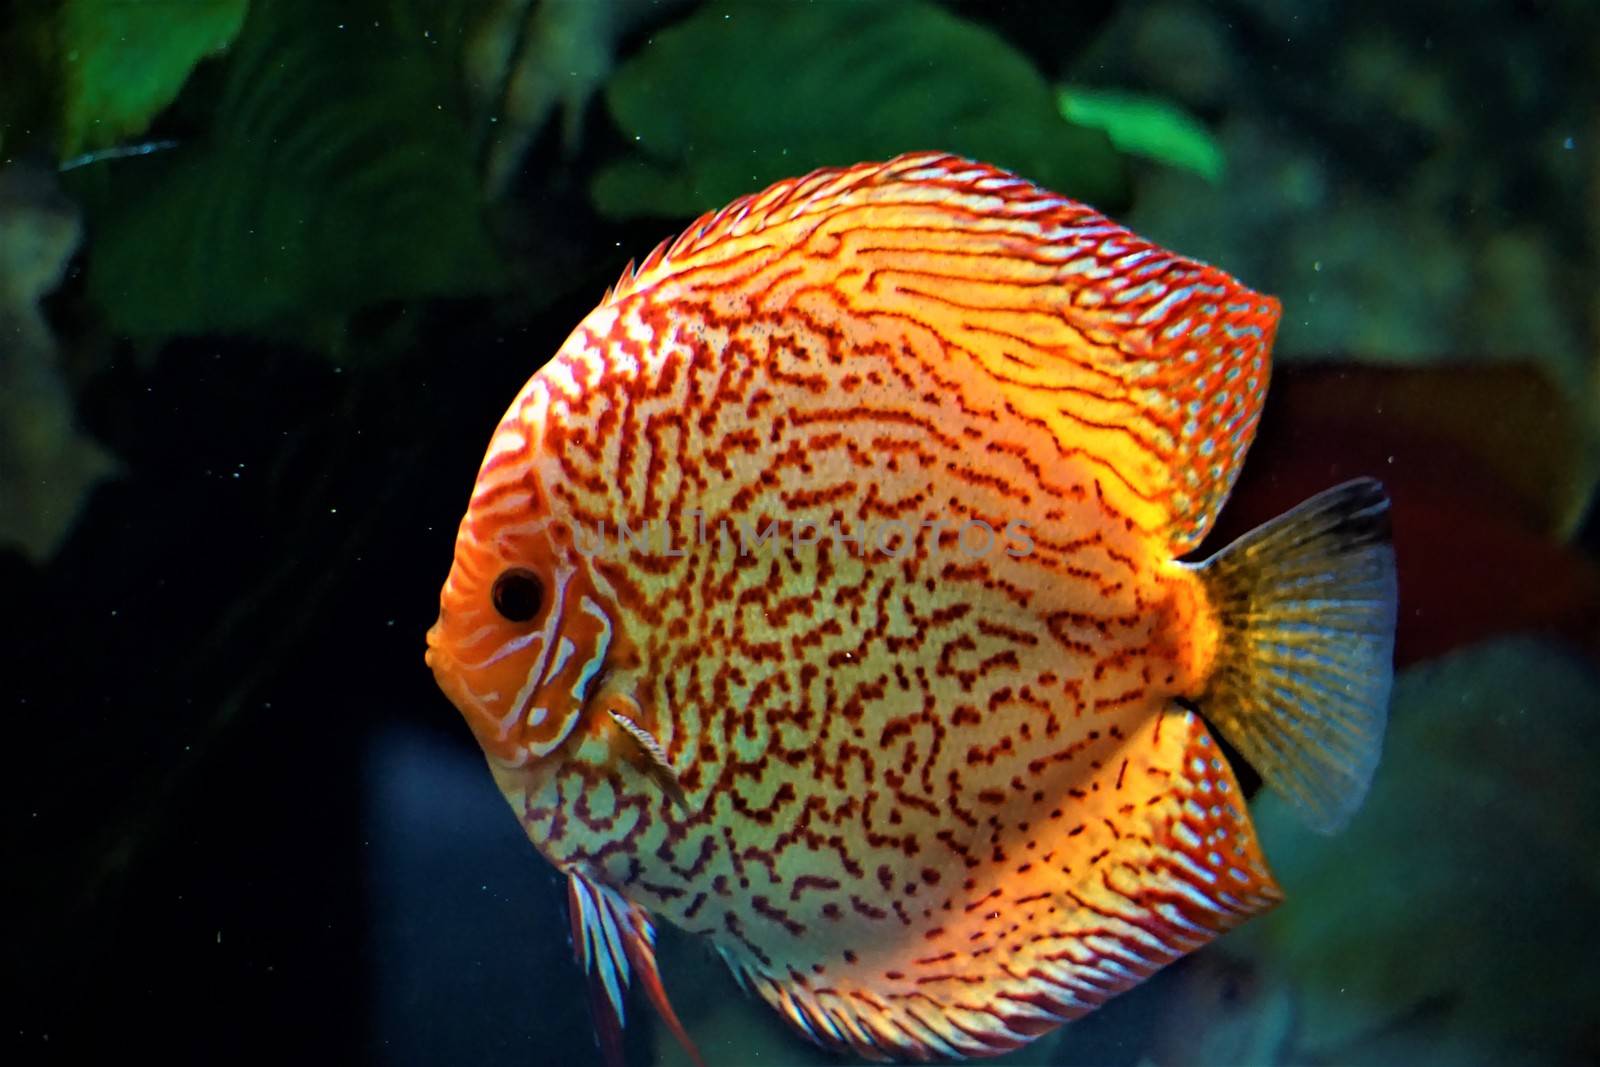 Discus fish swimming in an aquarium by pisces2386